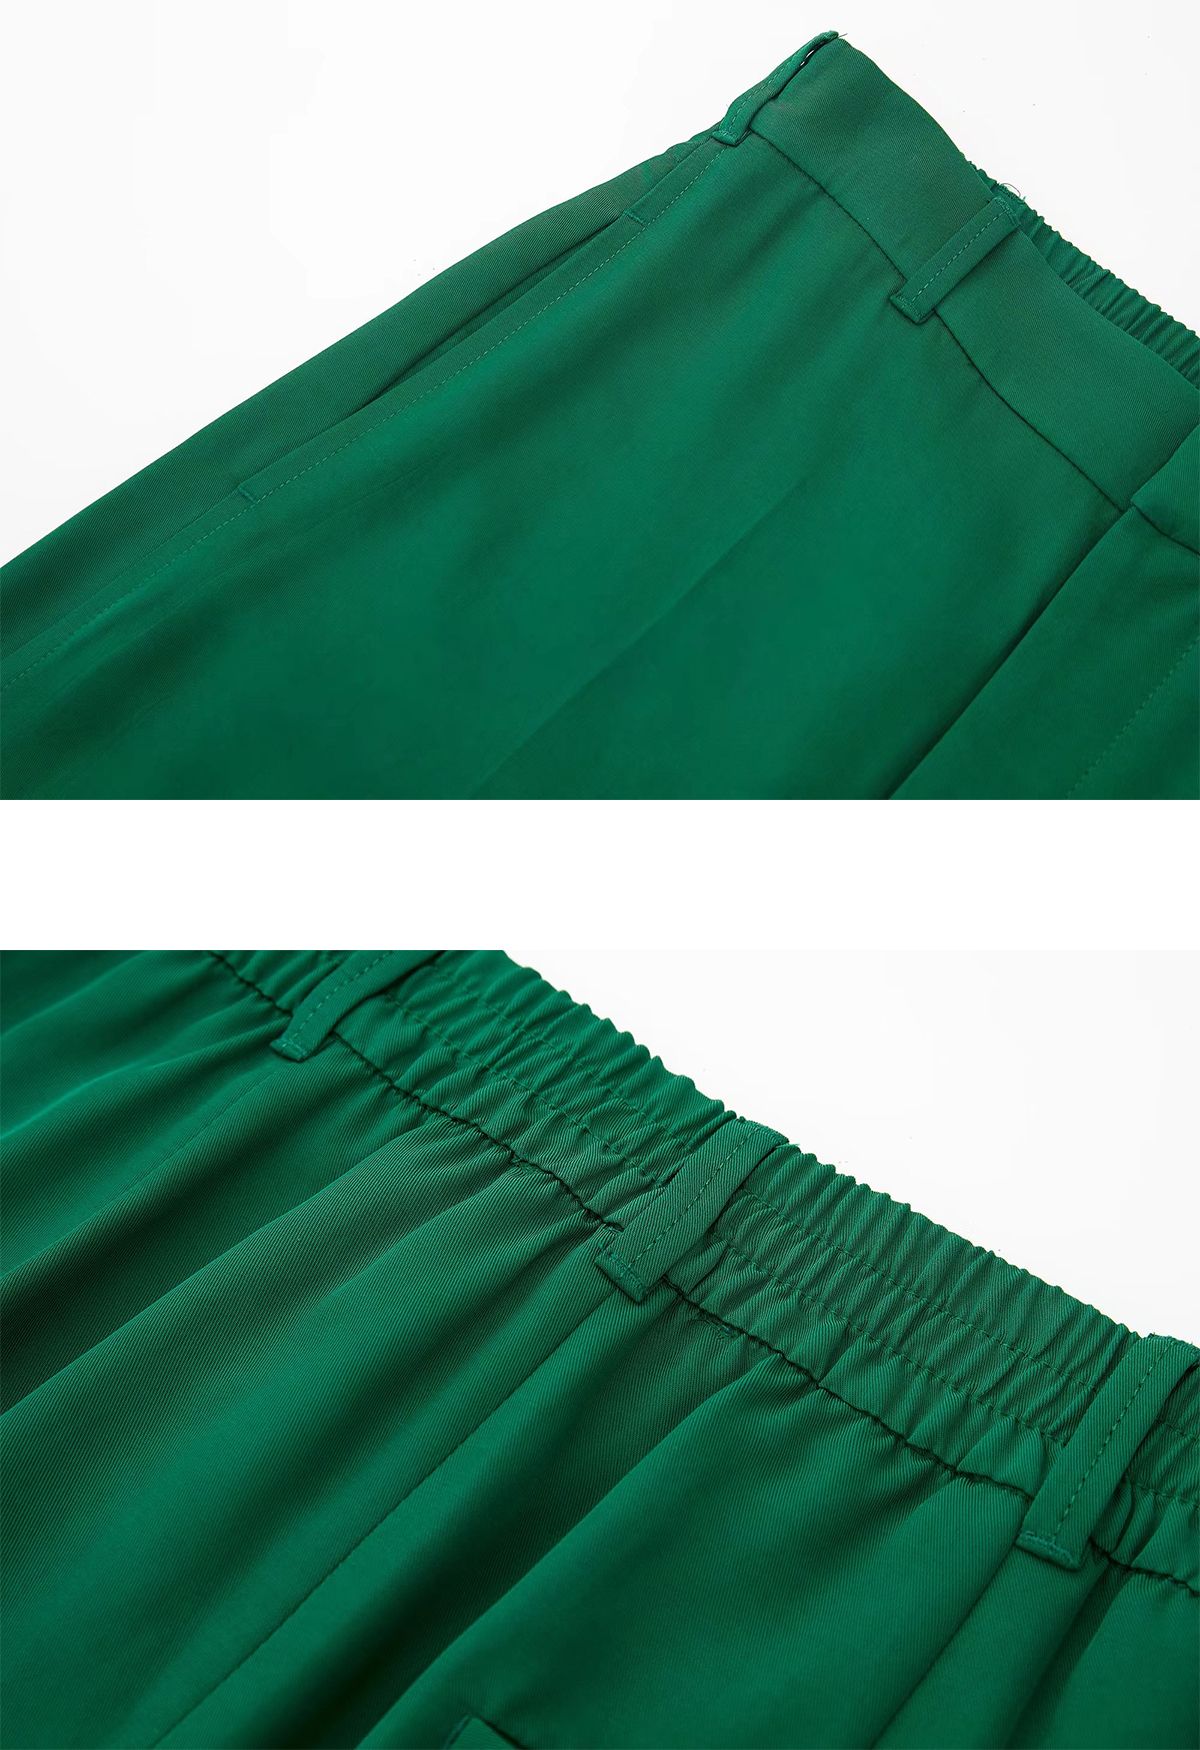 Pantalon à jambe droite drapé vert uni Simplicity